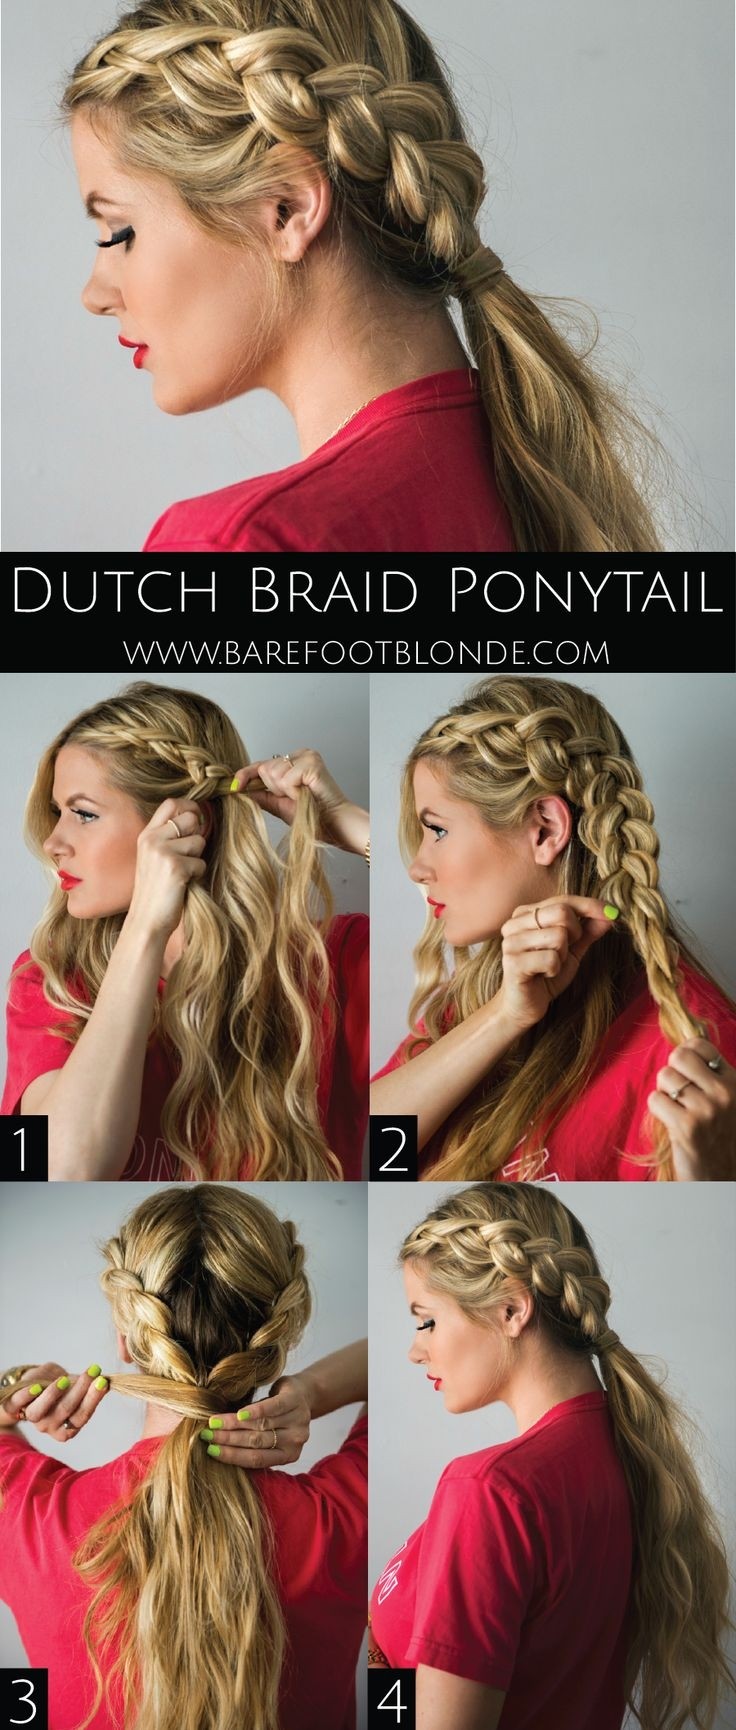 Dutch Braid Ponytail Tutorial for Long Hair